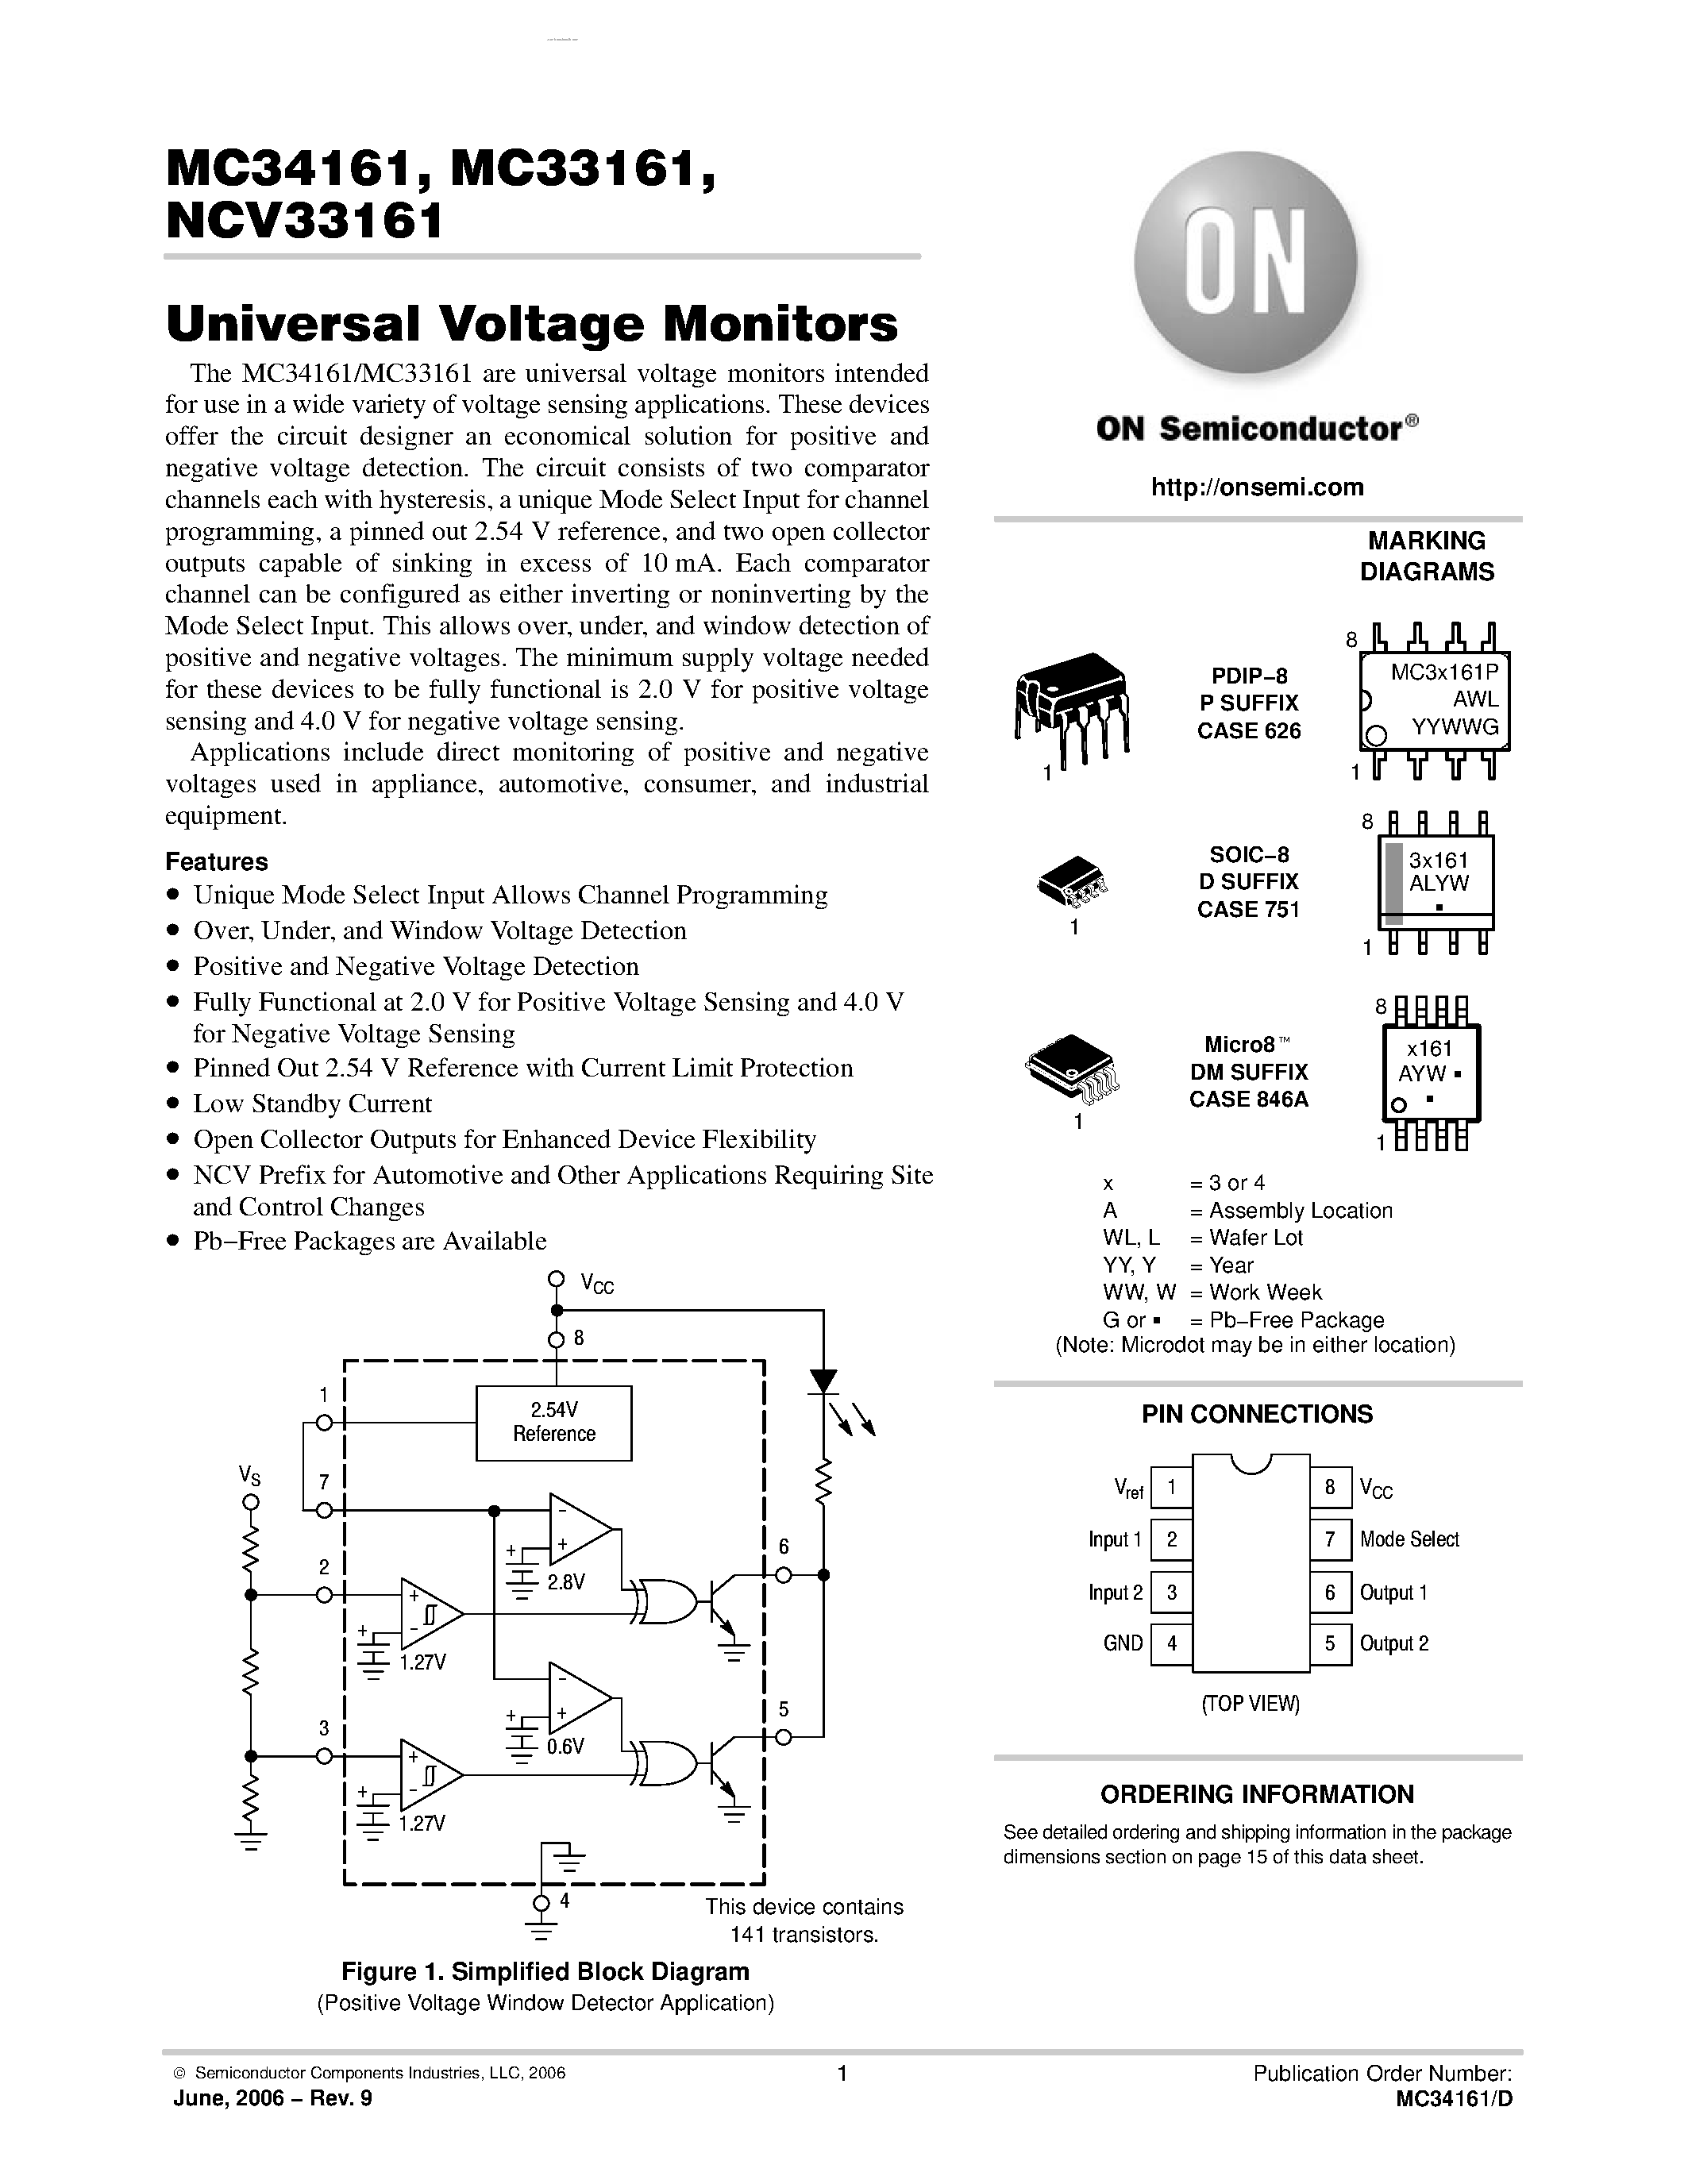 Datasheet MC33161 - (MC33161 / MC34161) Universal Voltage Monitors page 1